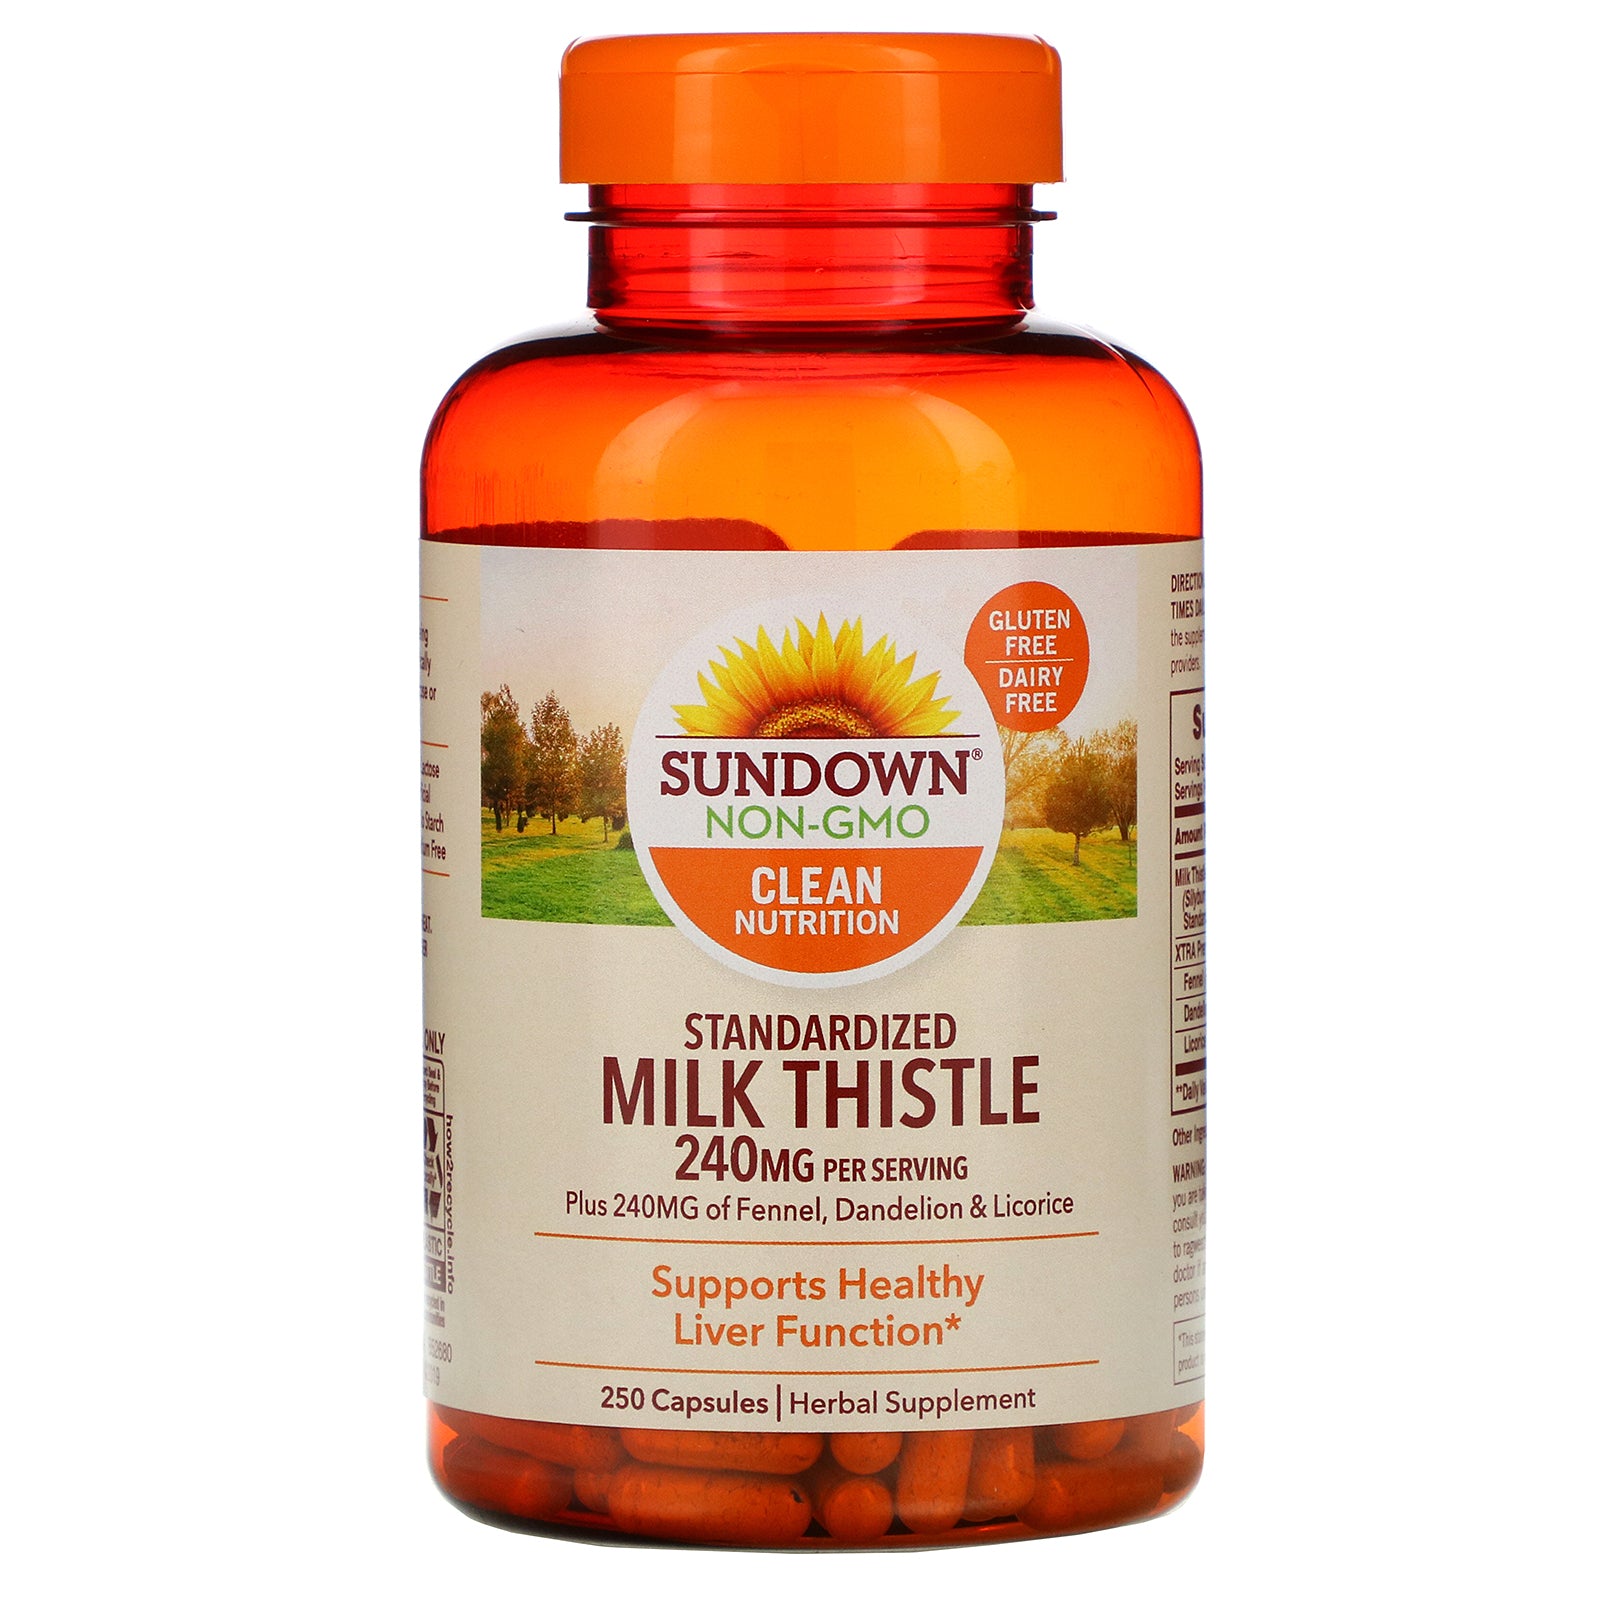 Sundown Naturals, Standardized Milk Thistle, 240 mg, 250 Capsules